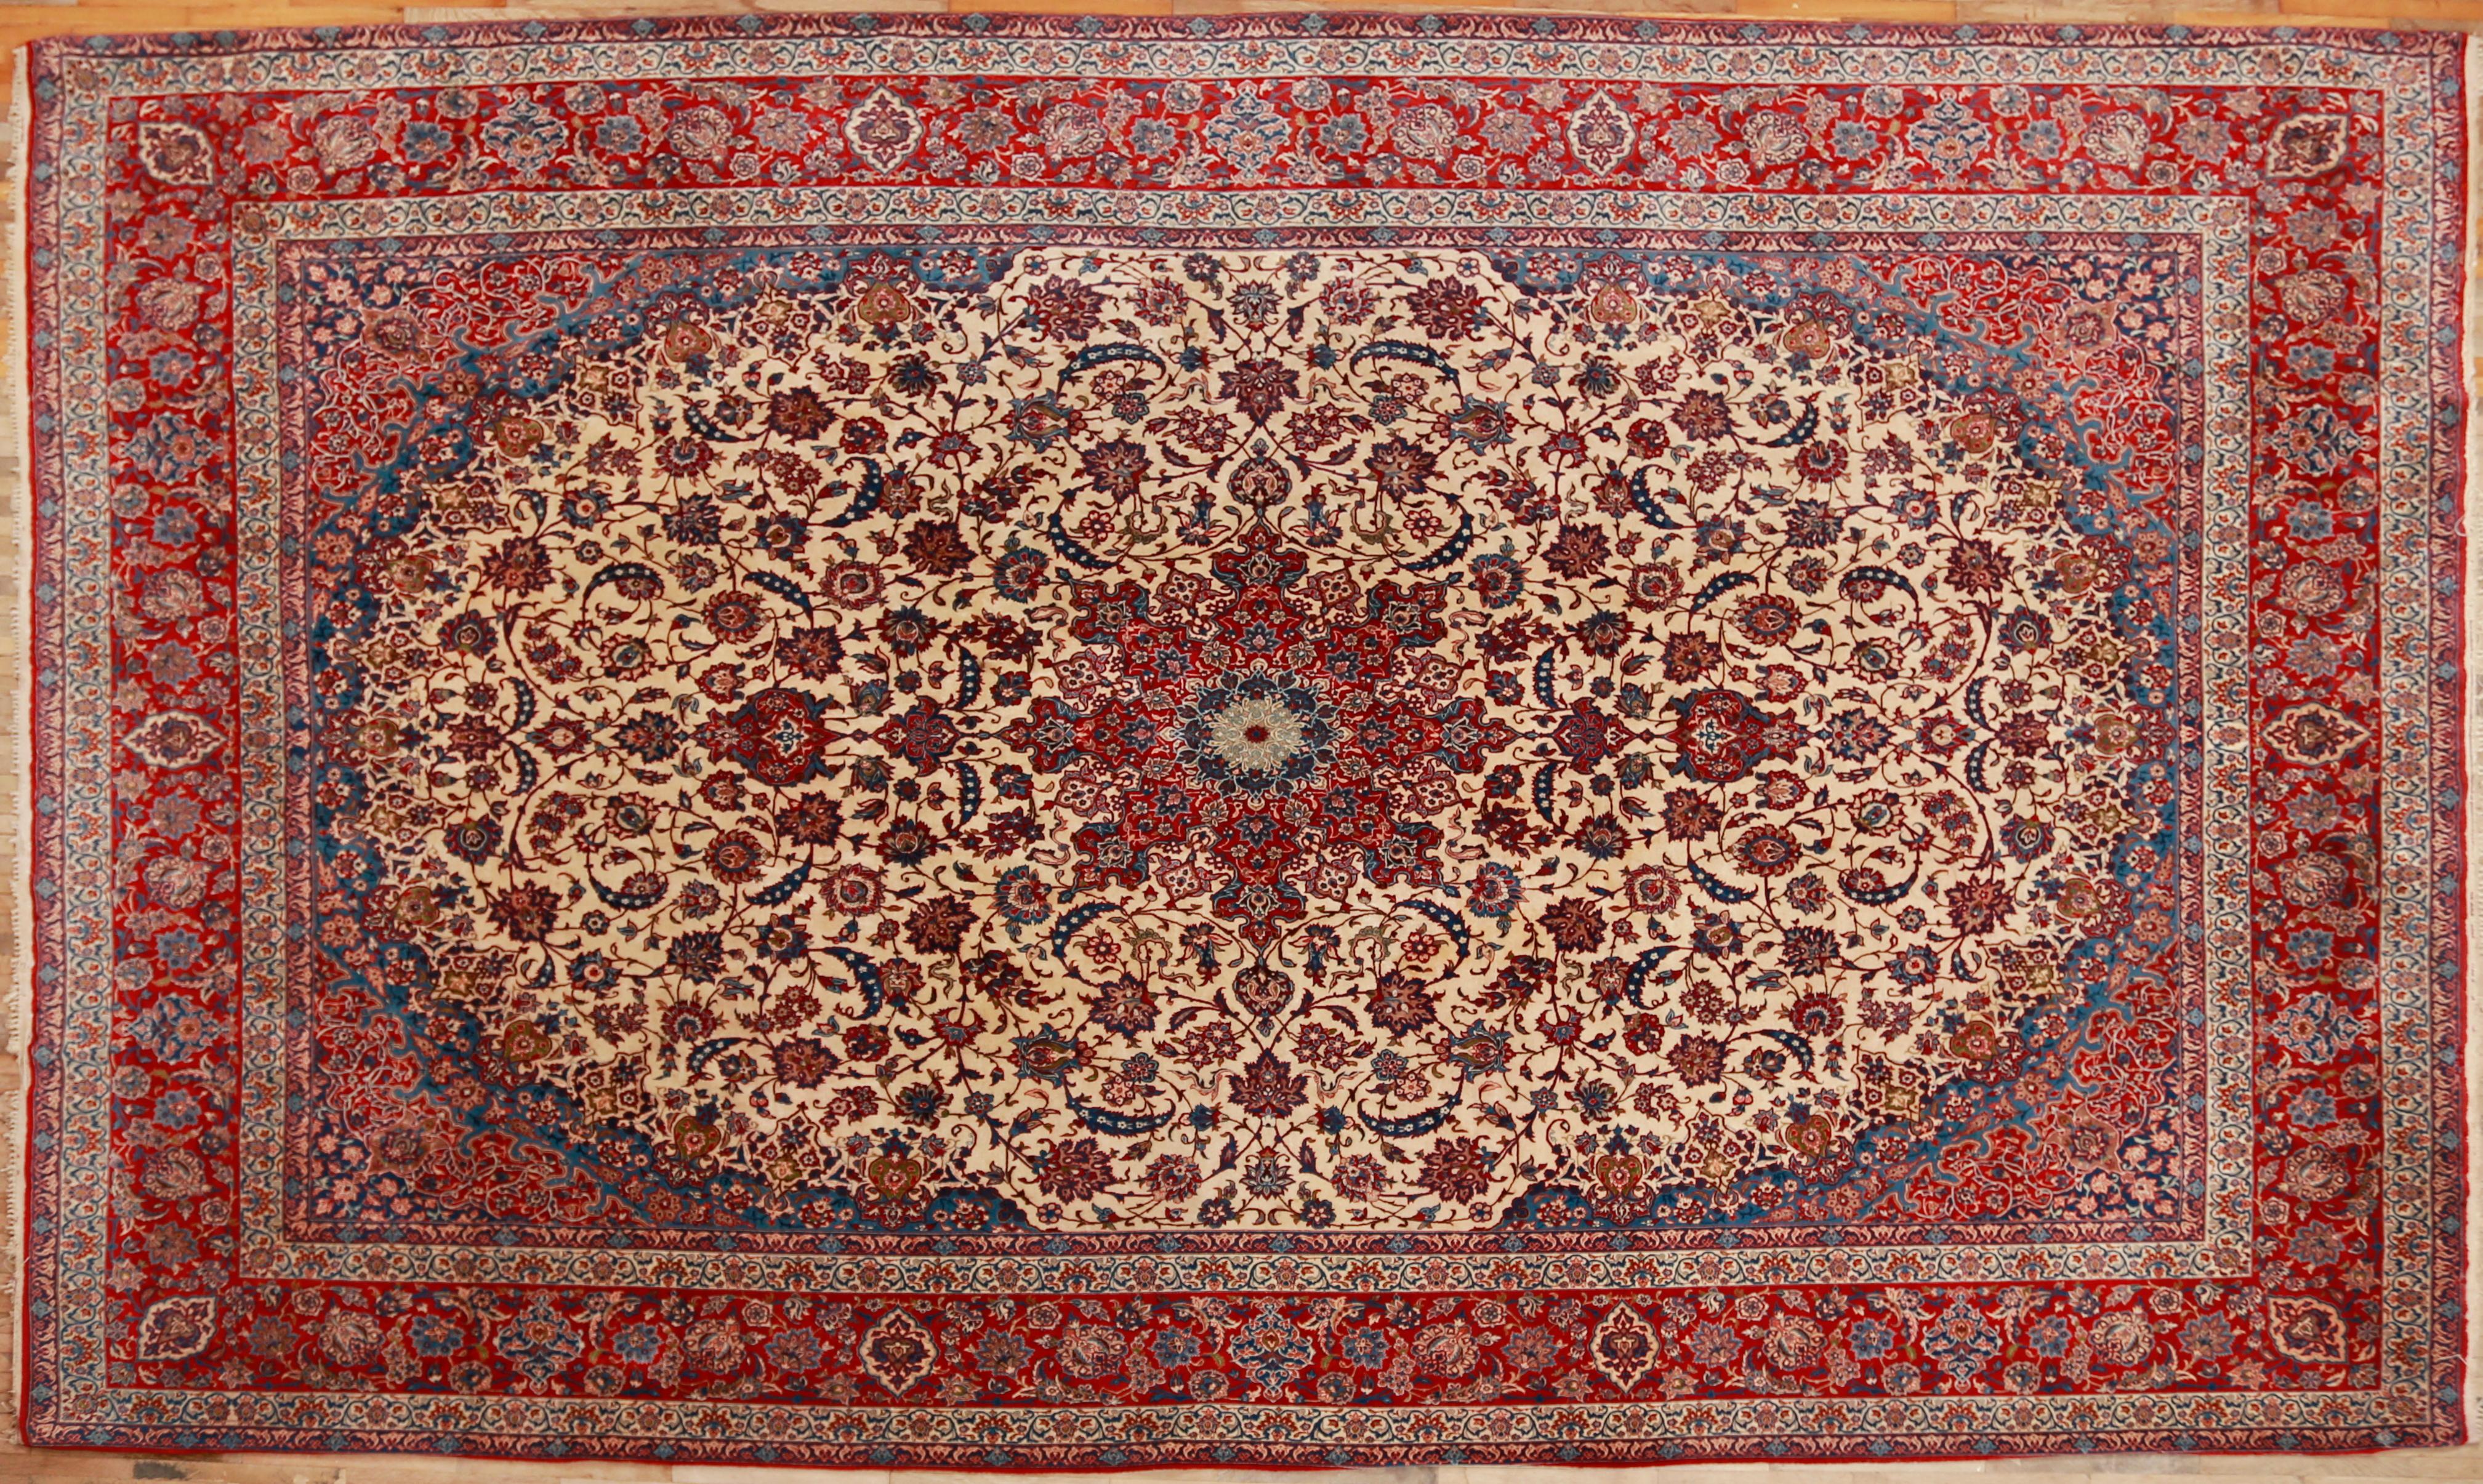 Tabriz Isfahan Persian carpet 400 X 260 cm million knots per m2 For Sale